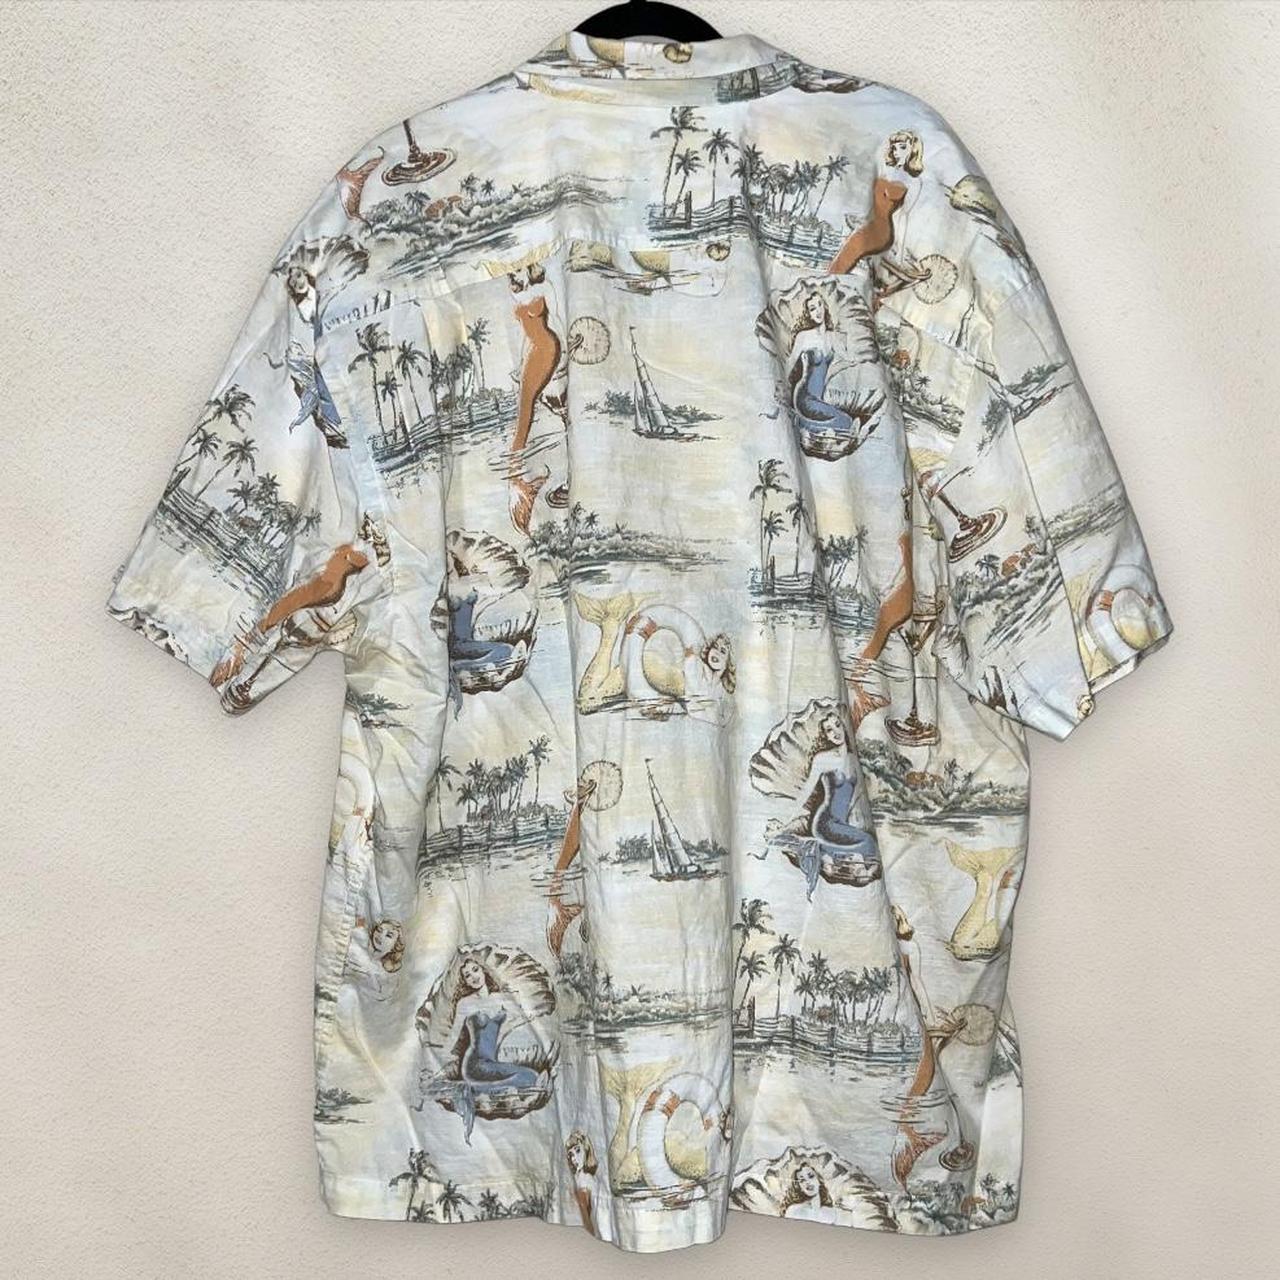 Vintage Mermaid Print Button Up Shirt Short Sleeve - Depop